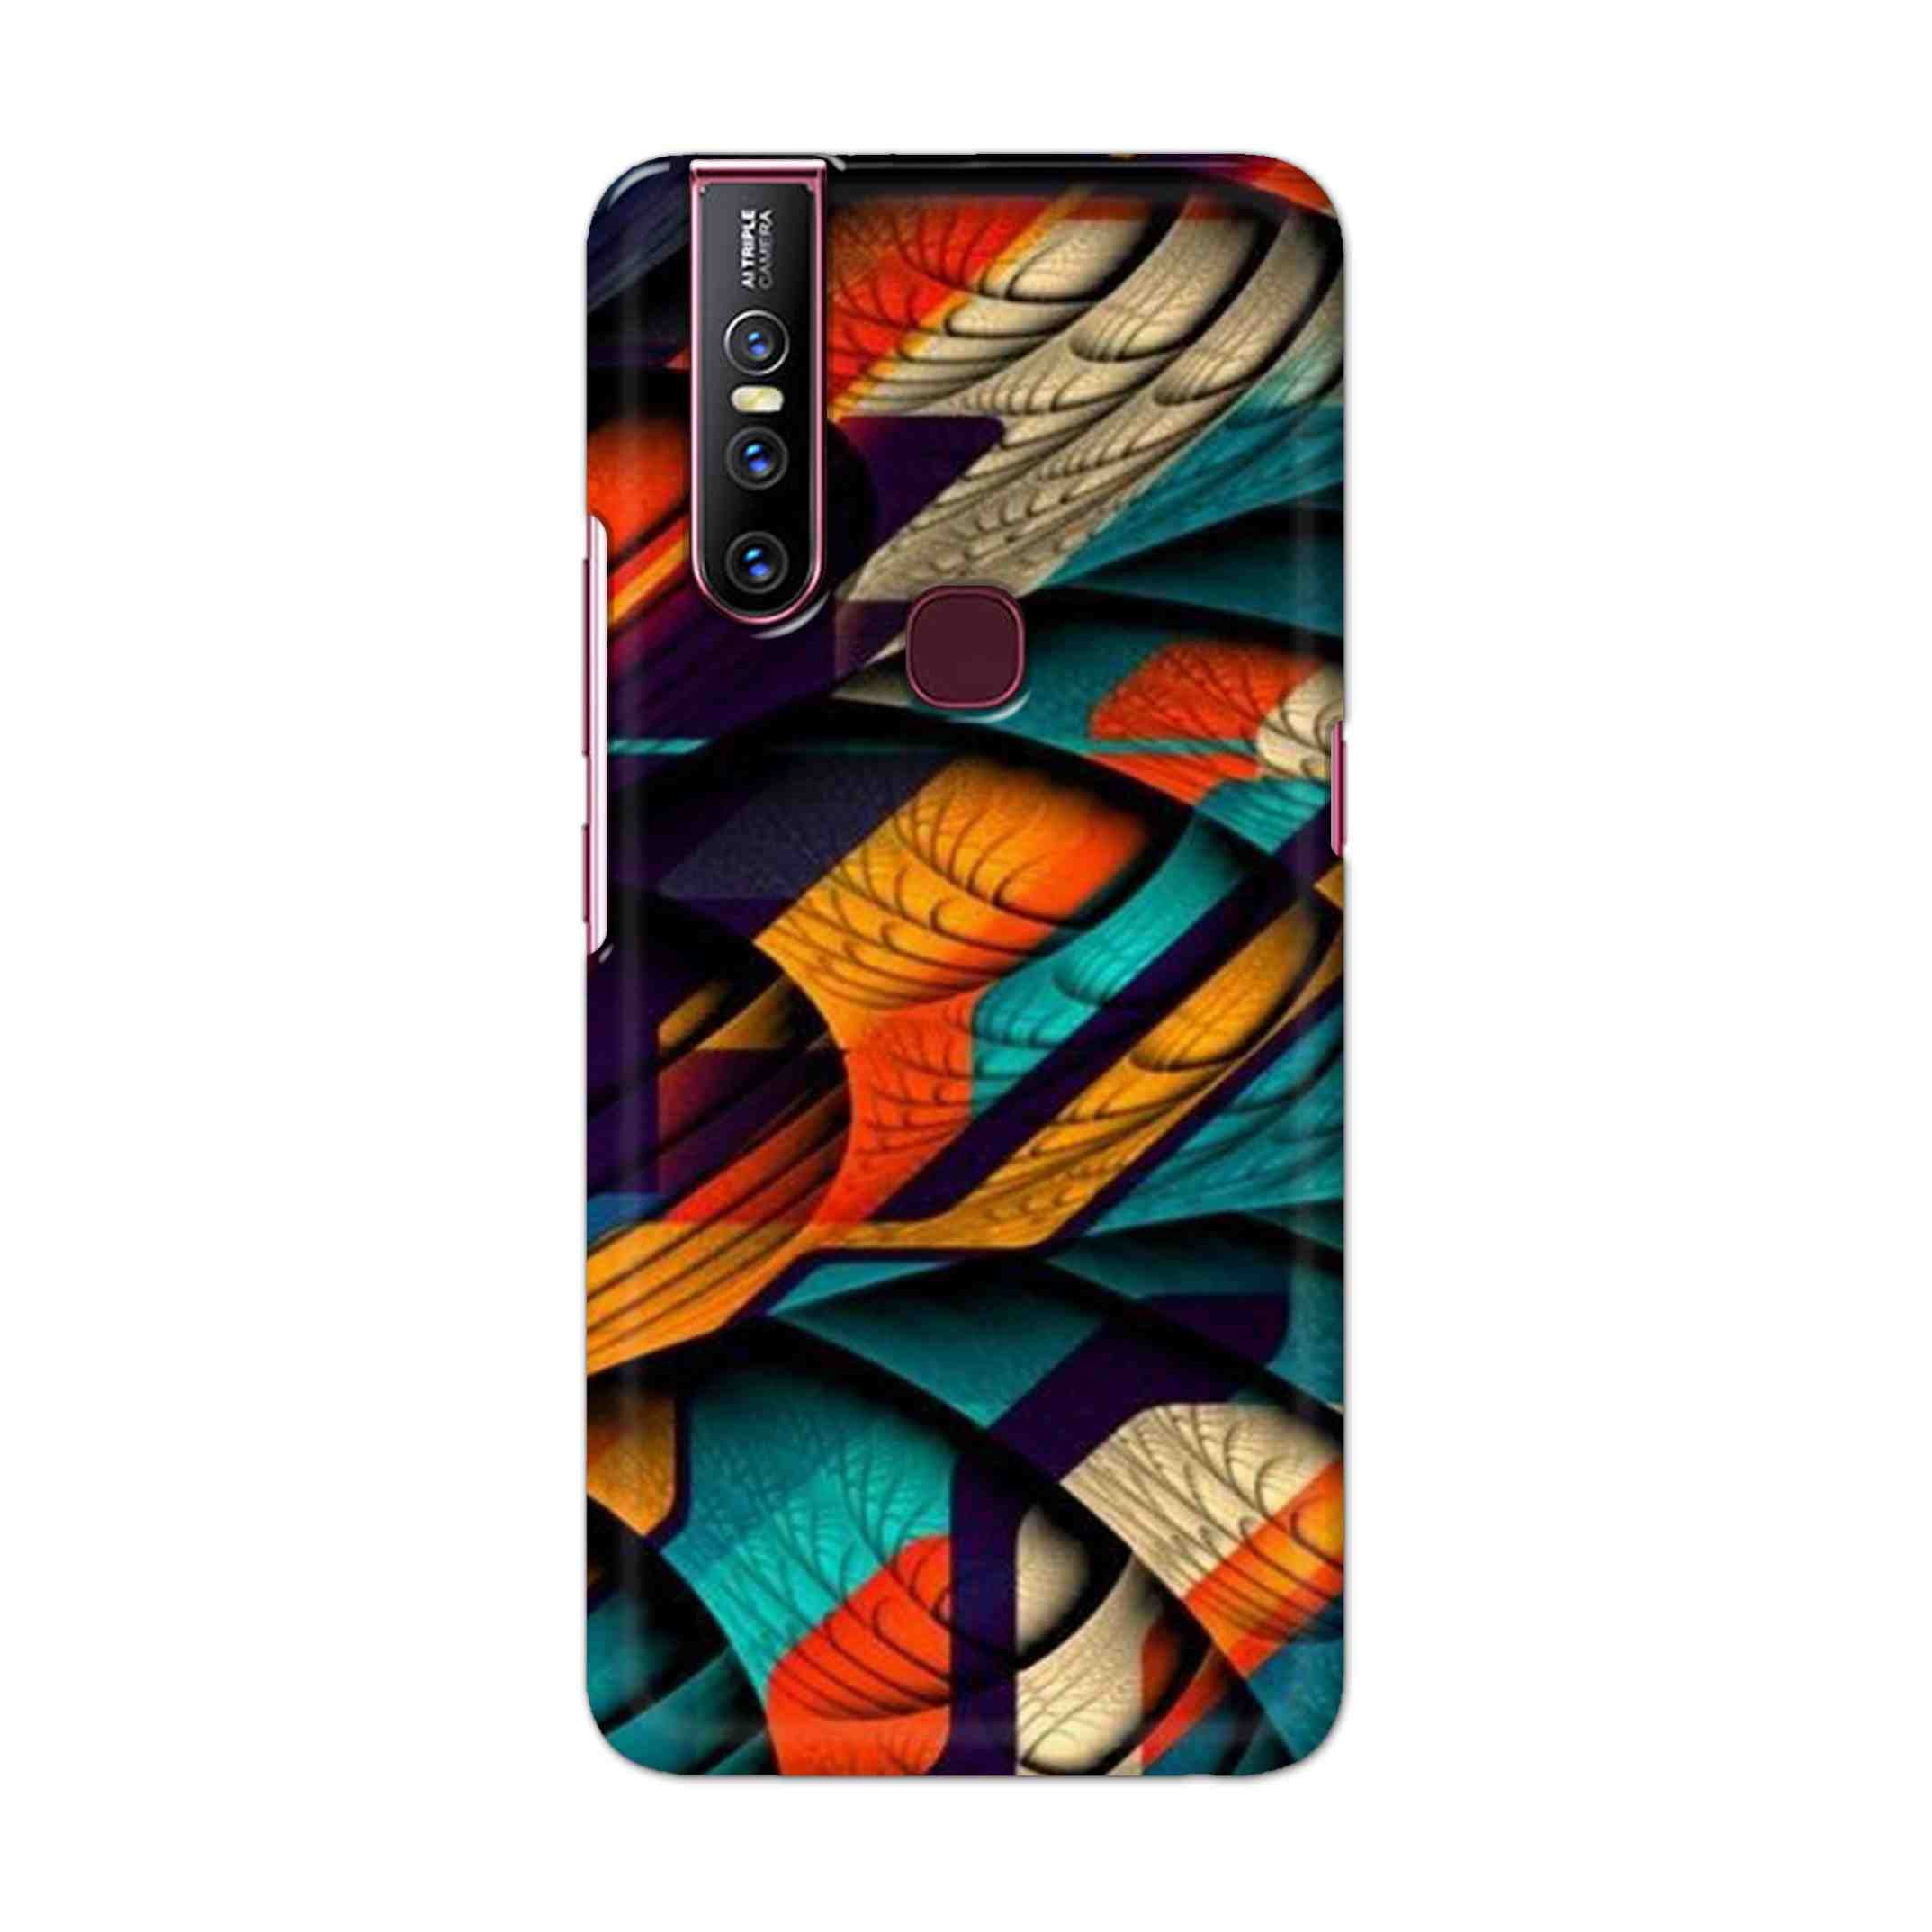 Buy Colour Abstract Hard Back Mobile Phone Case Cover For Vivo V15 Online